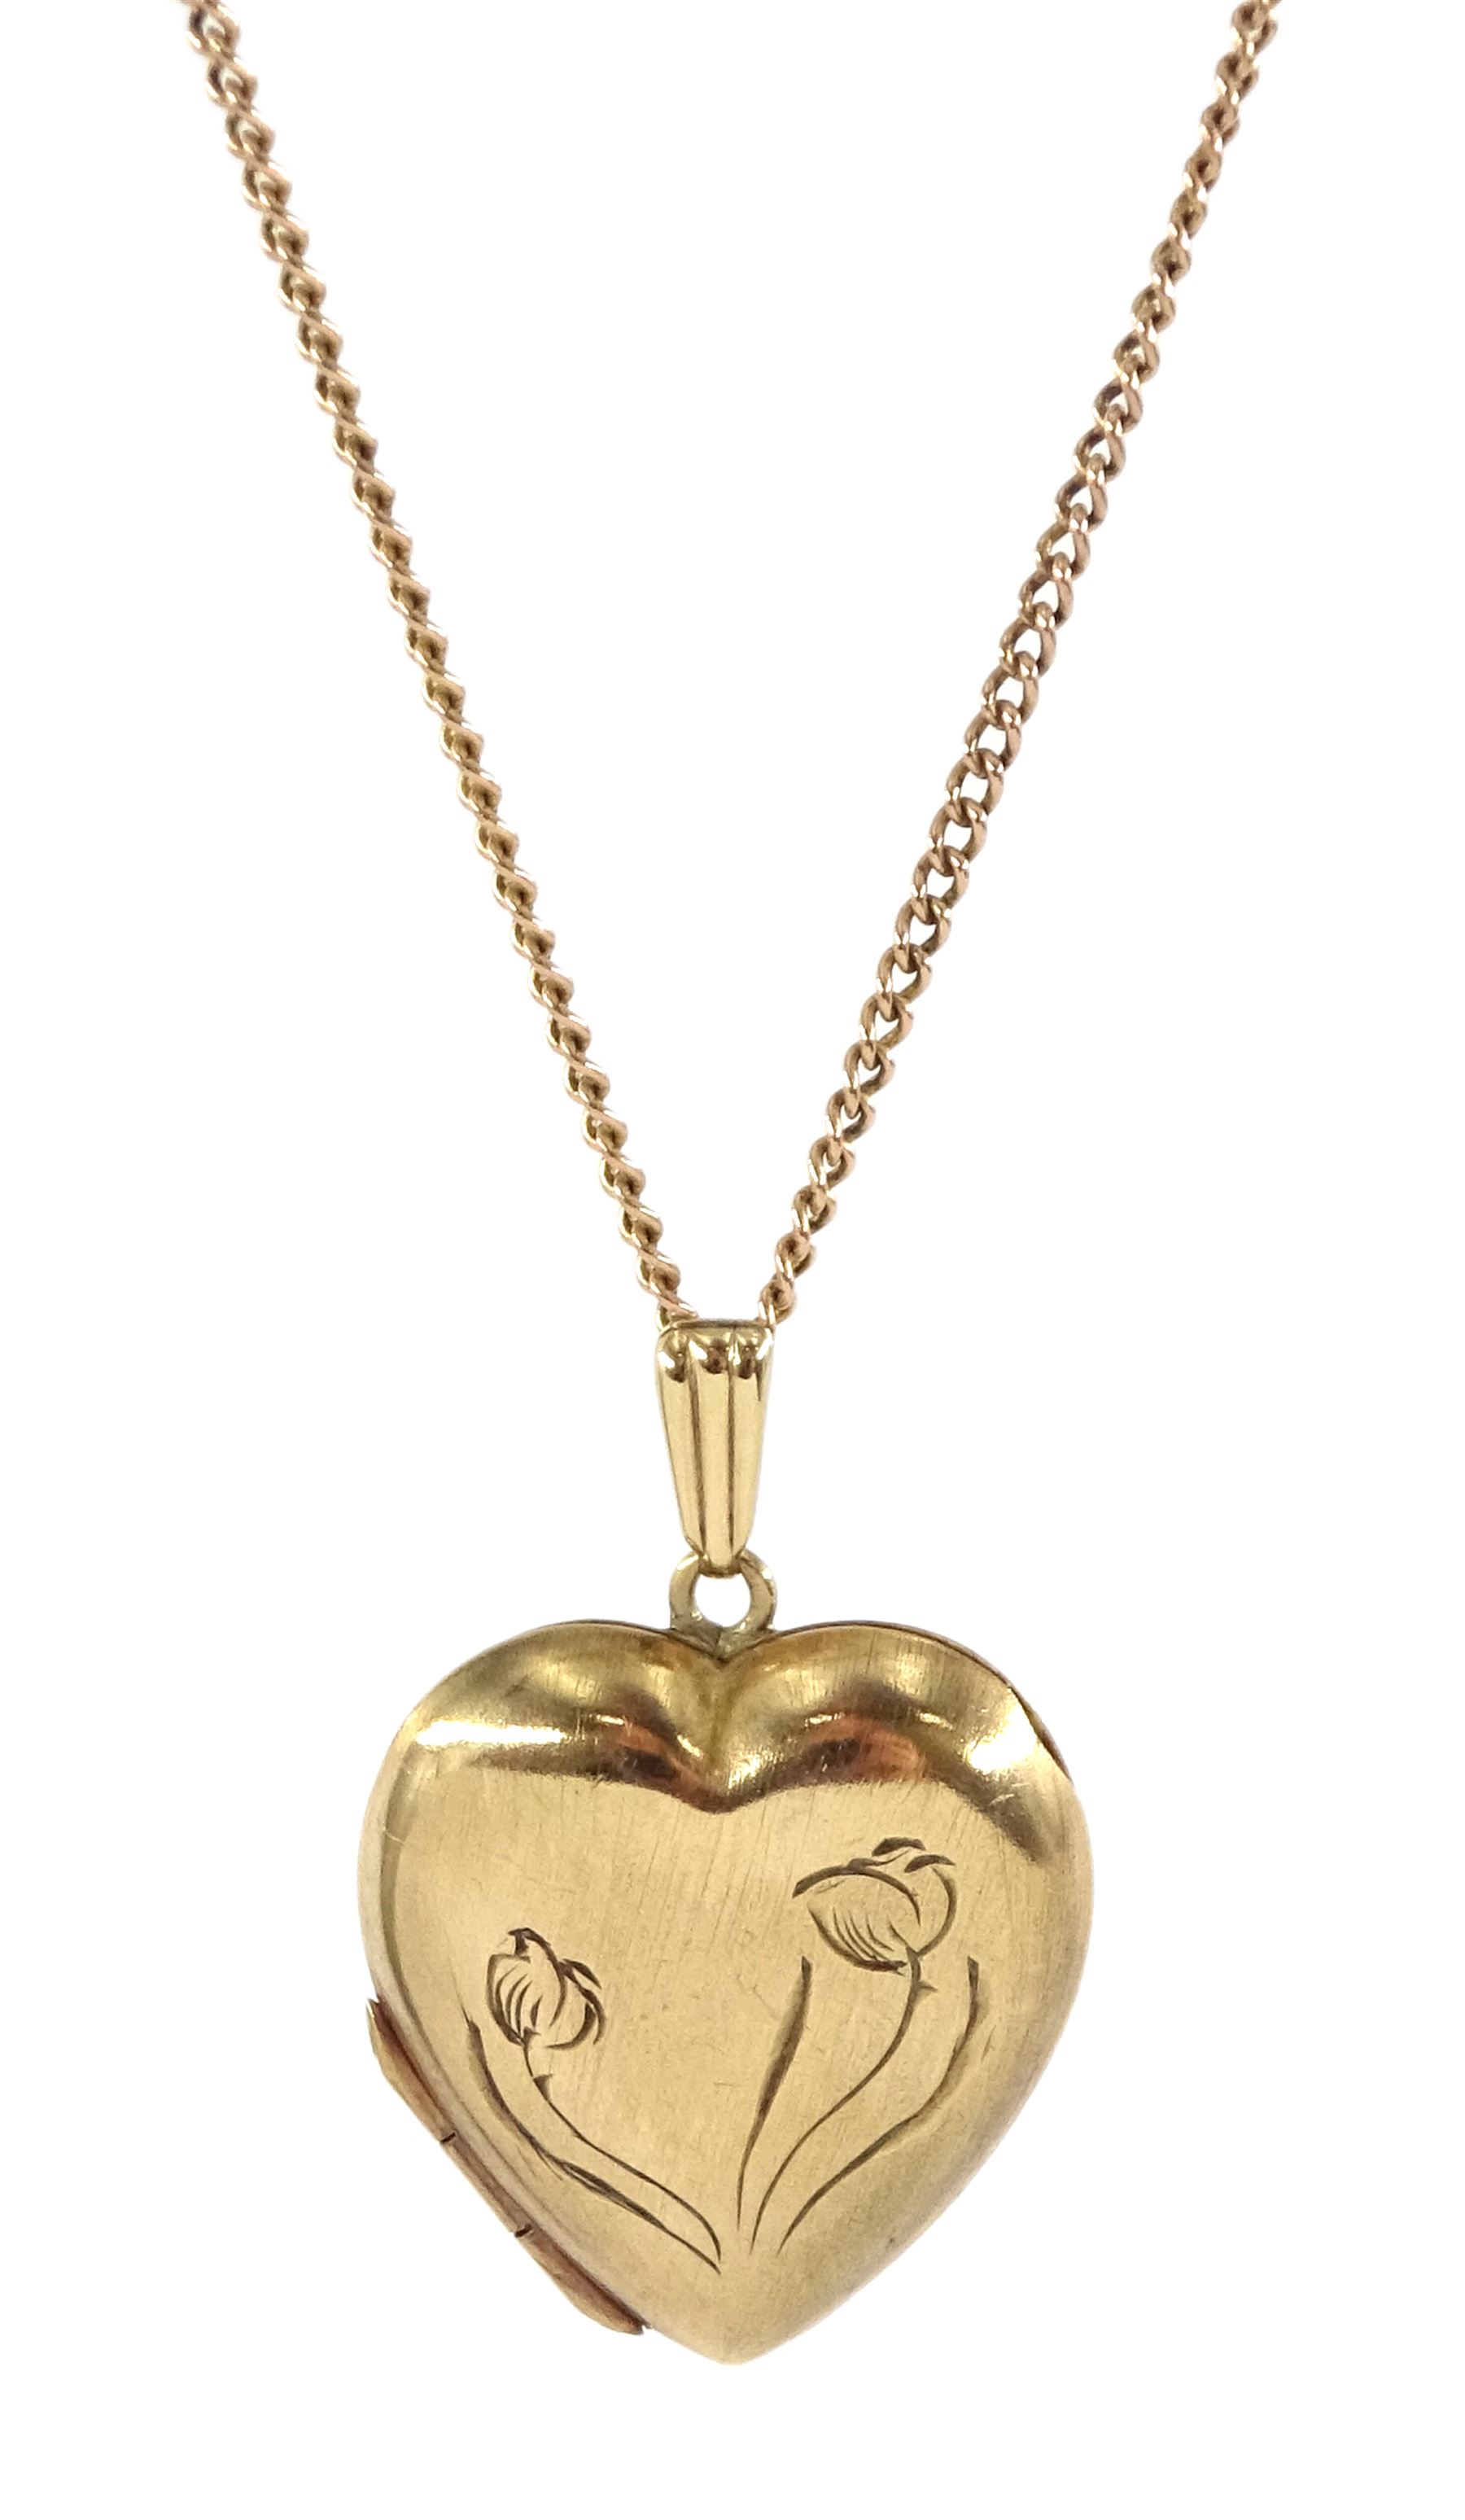 9ct gold foliate engraved heart locket pendant